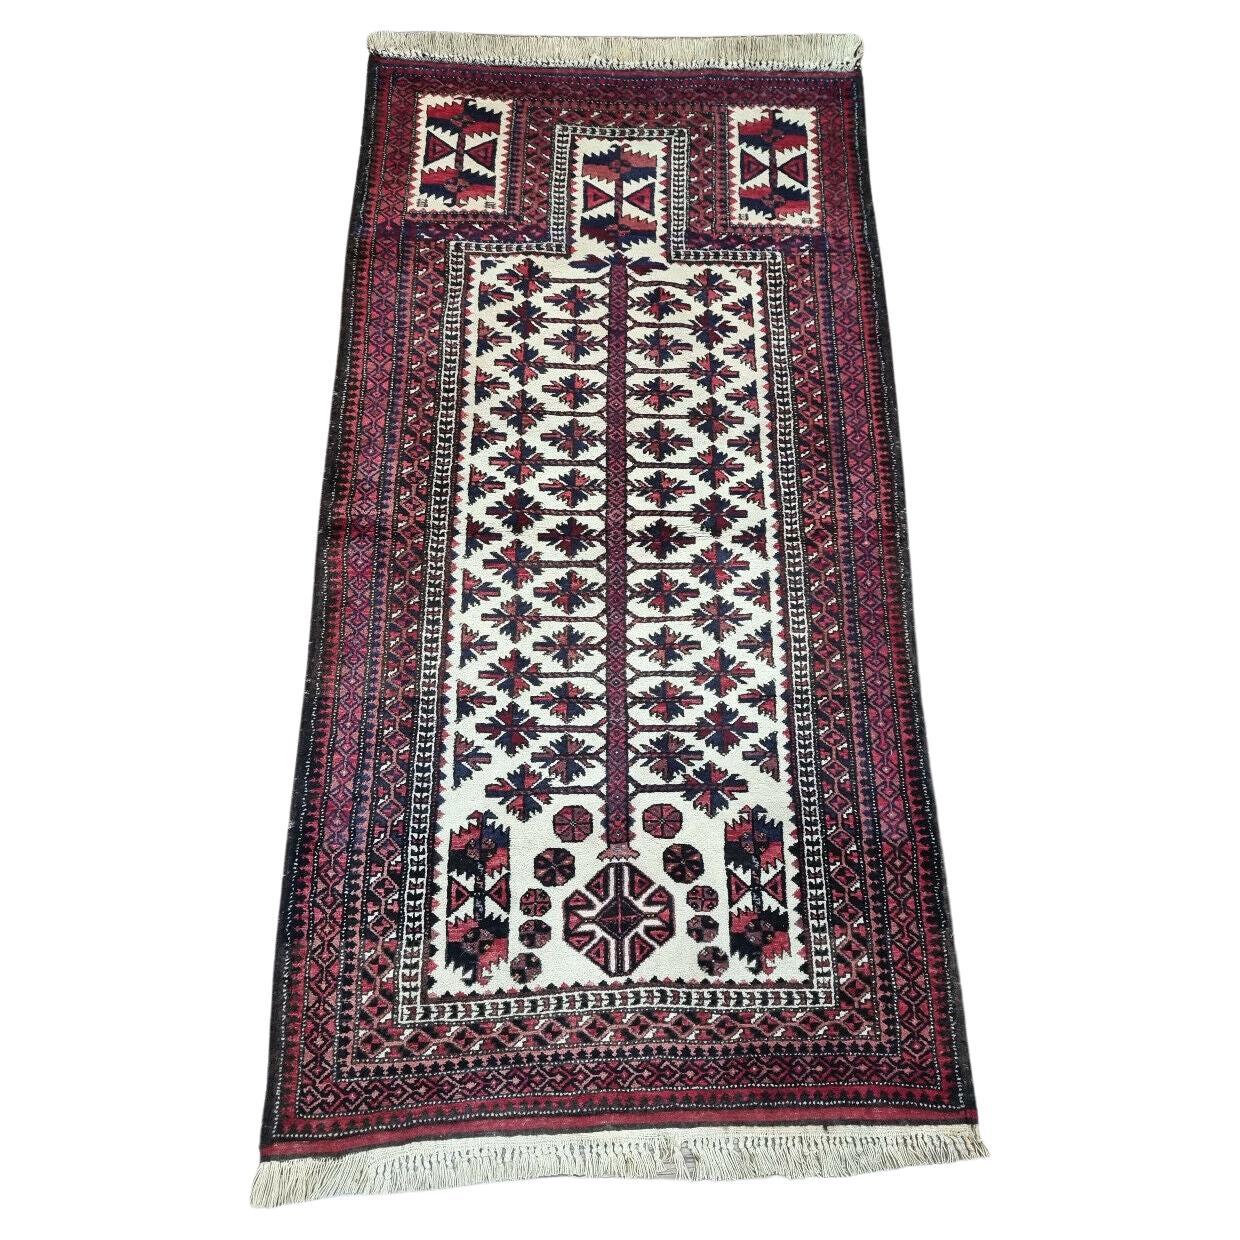 Handmade Vintage Afghan Baluch Prayer Rug 2.7' x 5.5', 1950s - 1D90 For Sale